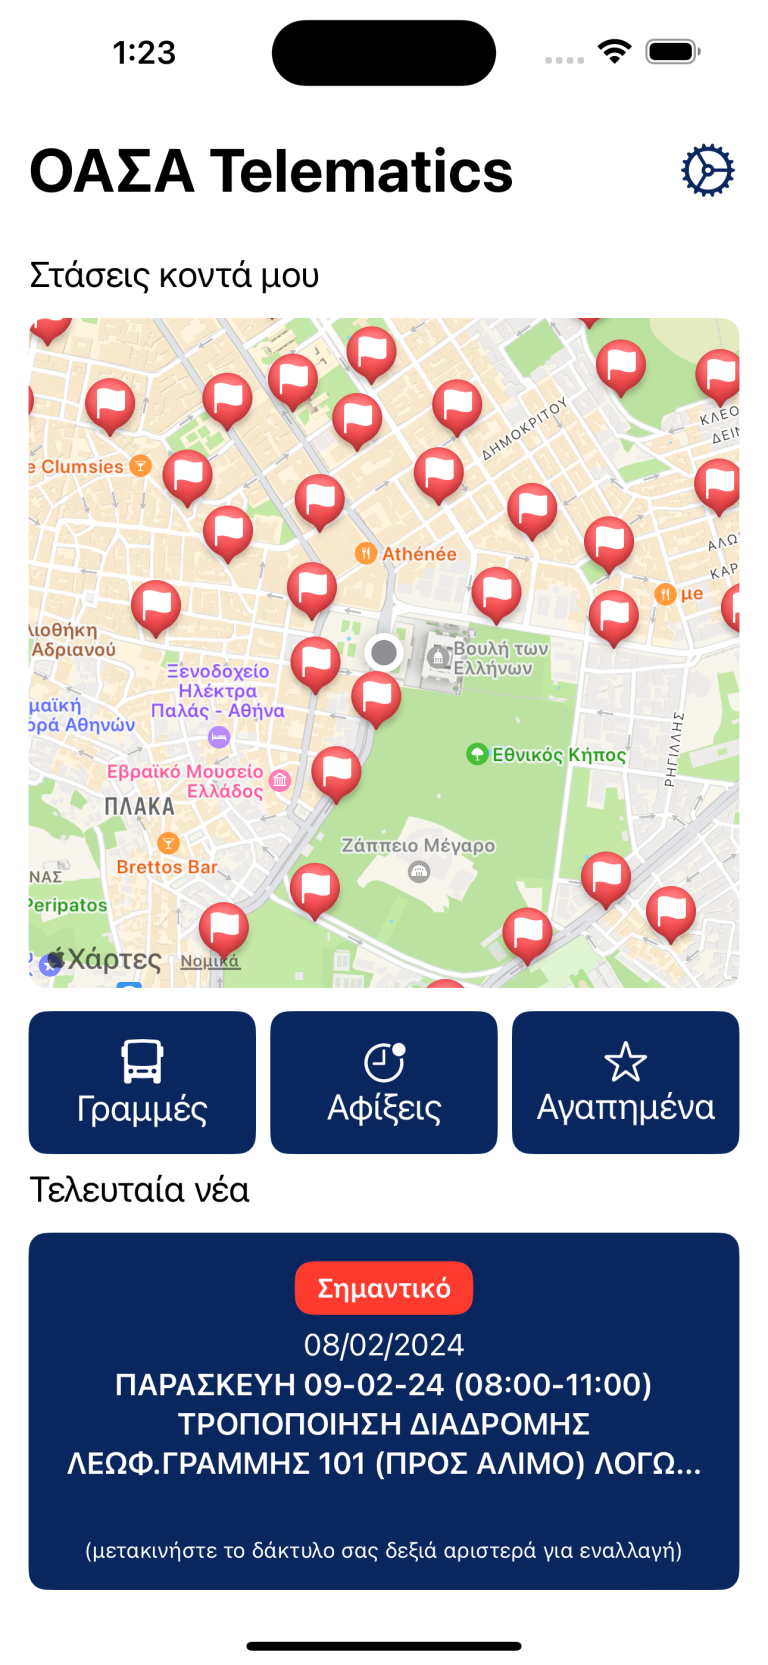 OASA : Ενημέρωση δρομολογίων σε πραγματικό χρόνο για συσκευή iPhone -DIMOPRASION.GR